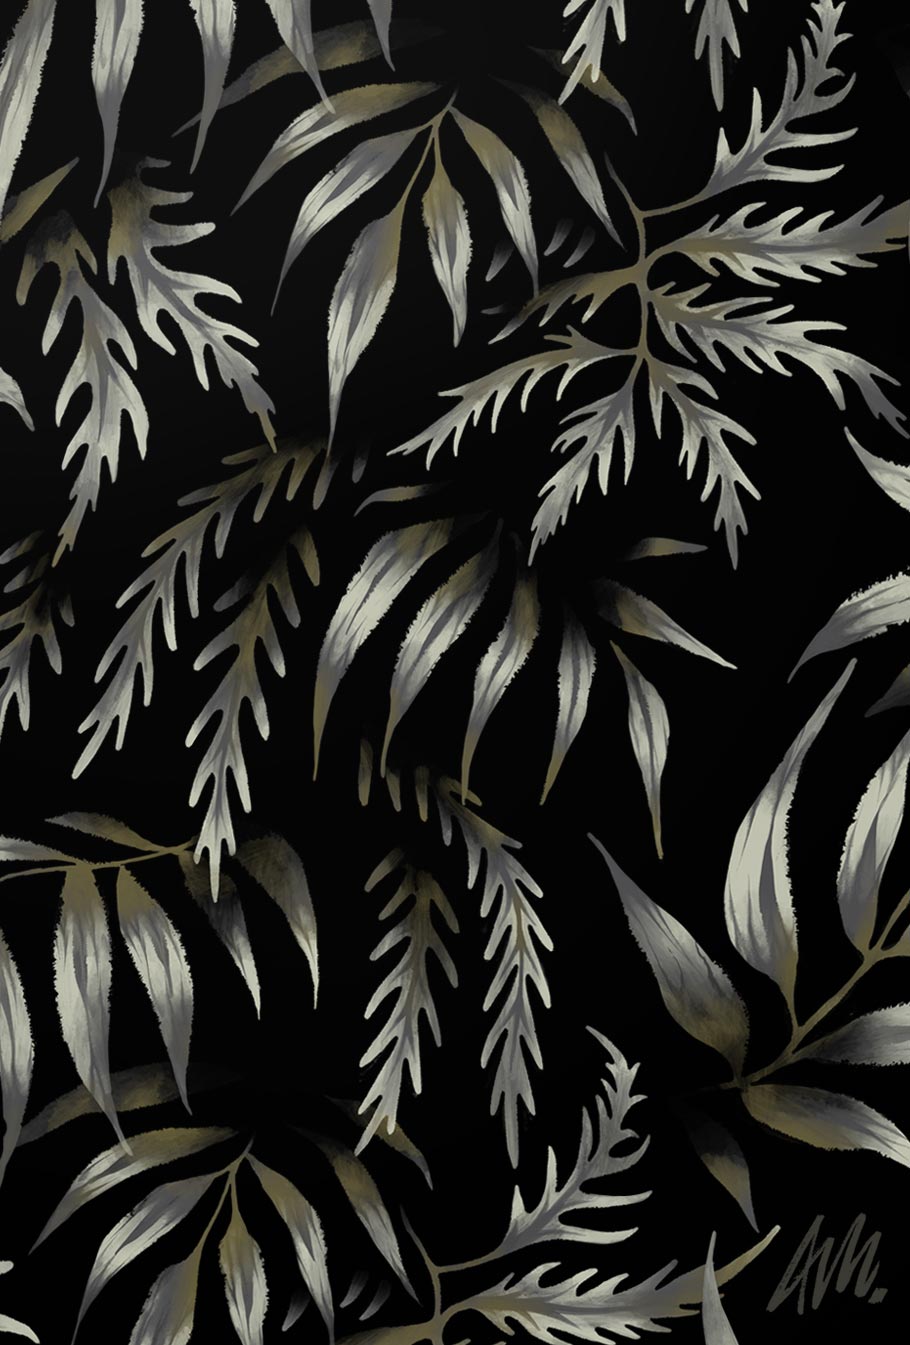 Fern leaf print pattern black by Andrea Muller